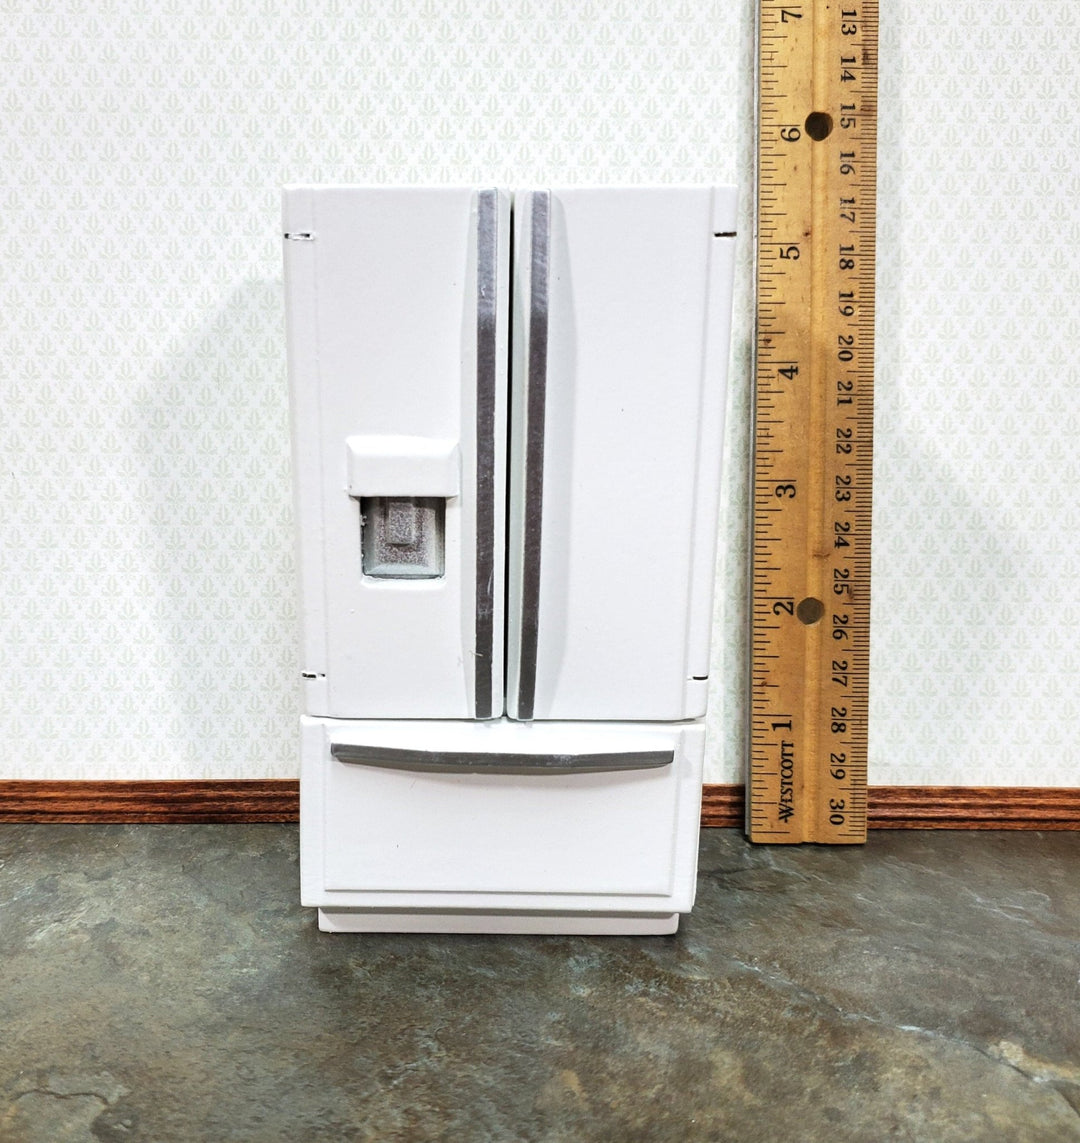 Dollhouse Fridge Modern Refrigerator White Silver 2 Door 1:12 Scale Miniature - Miniature Crush